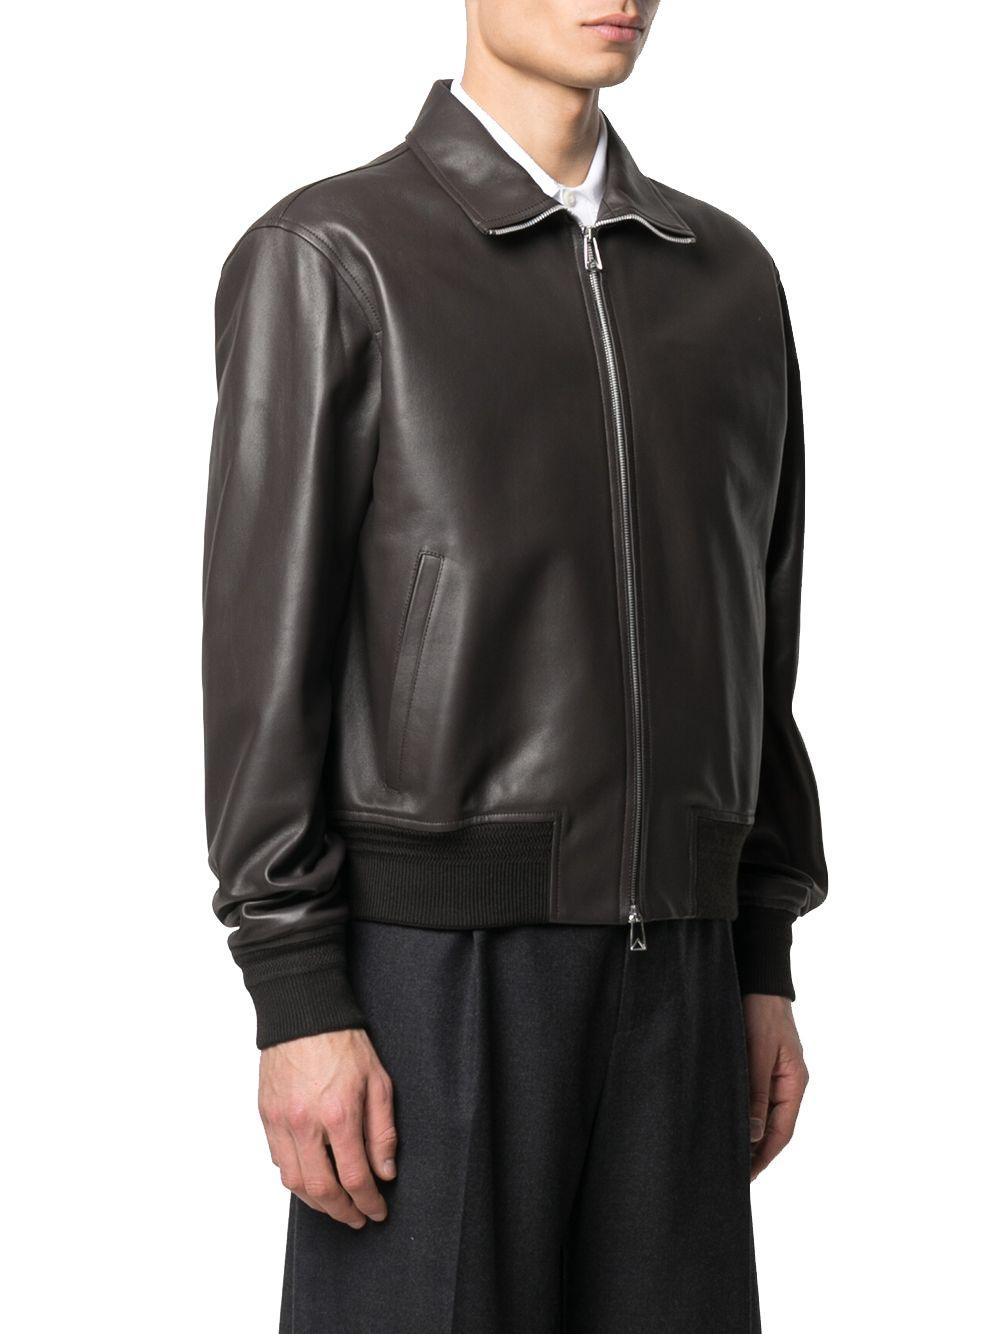 Bottega Veneta Leather Outerwear Jacket in Black for Men - Lyst